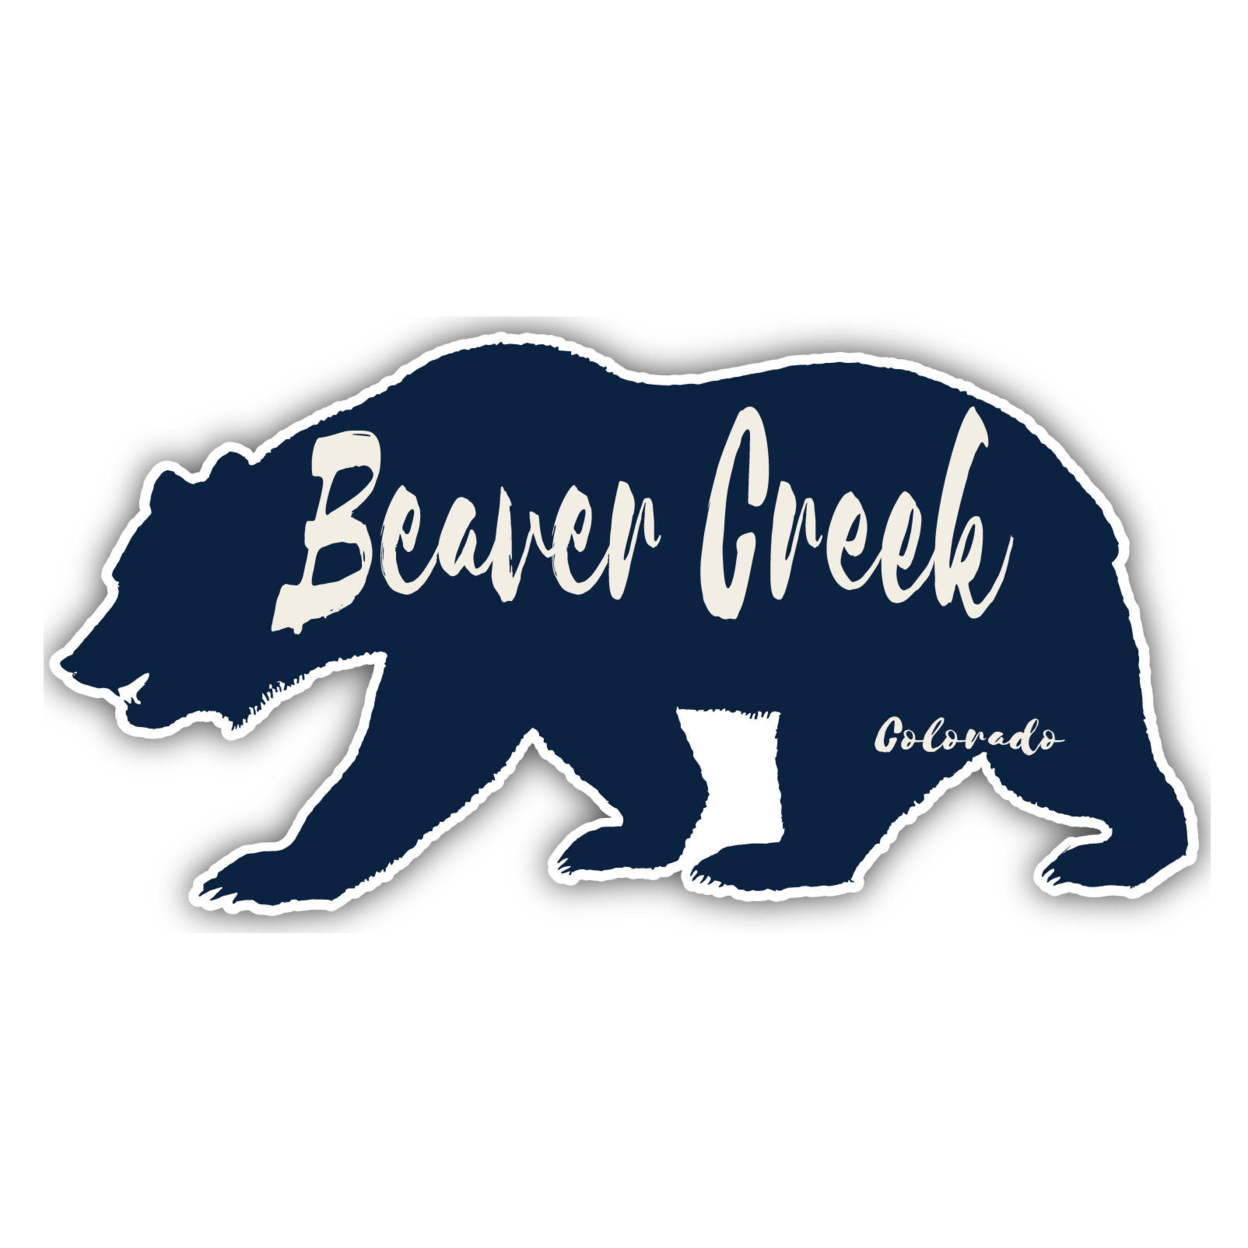 Beaver Creek Colorado Souvenir Decorative Stickers (Choose Theme And Size) - Single Unit, 12-Inch, Bear